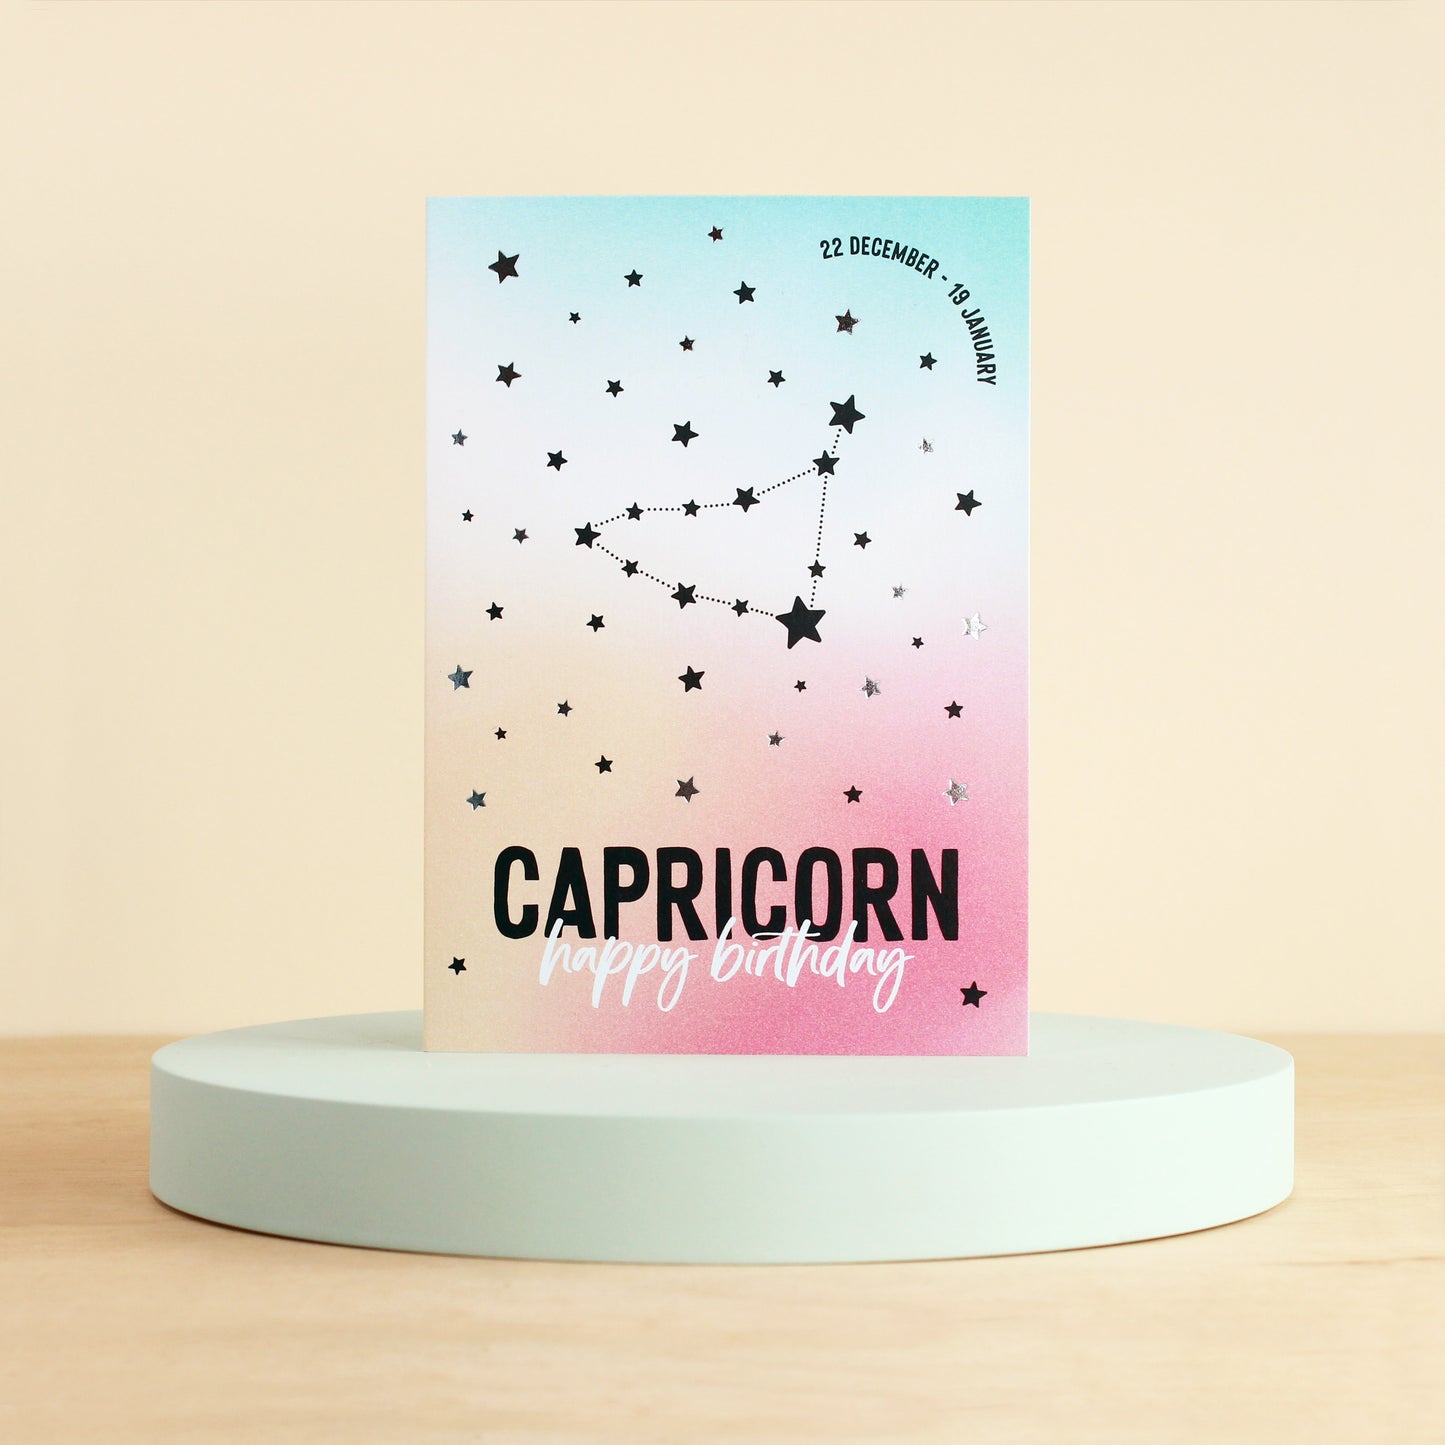 Capricorn birthday card